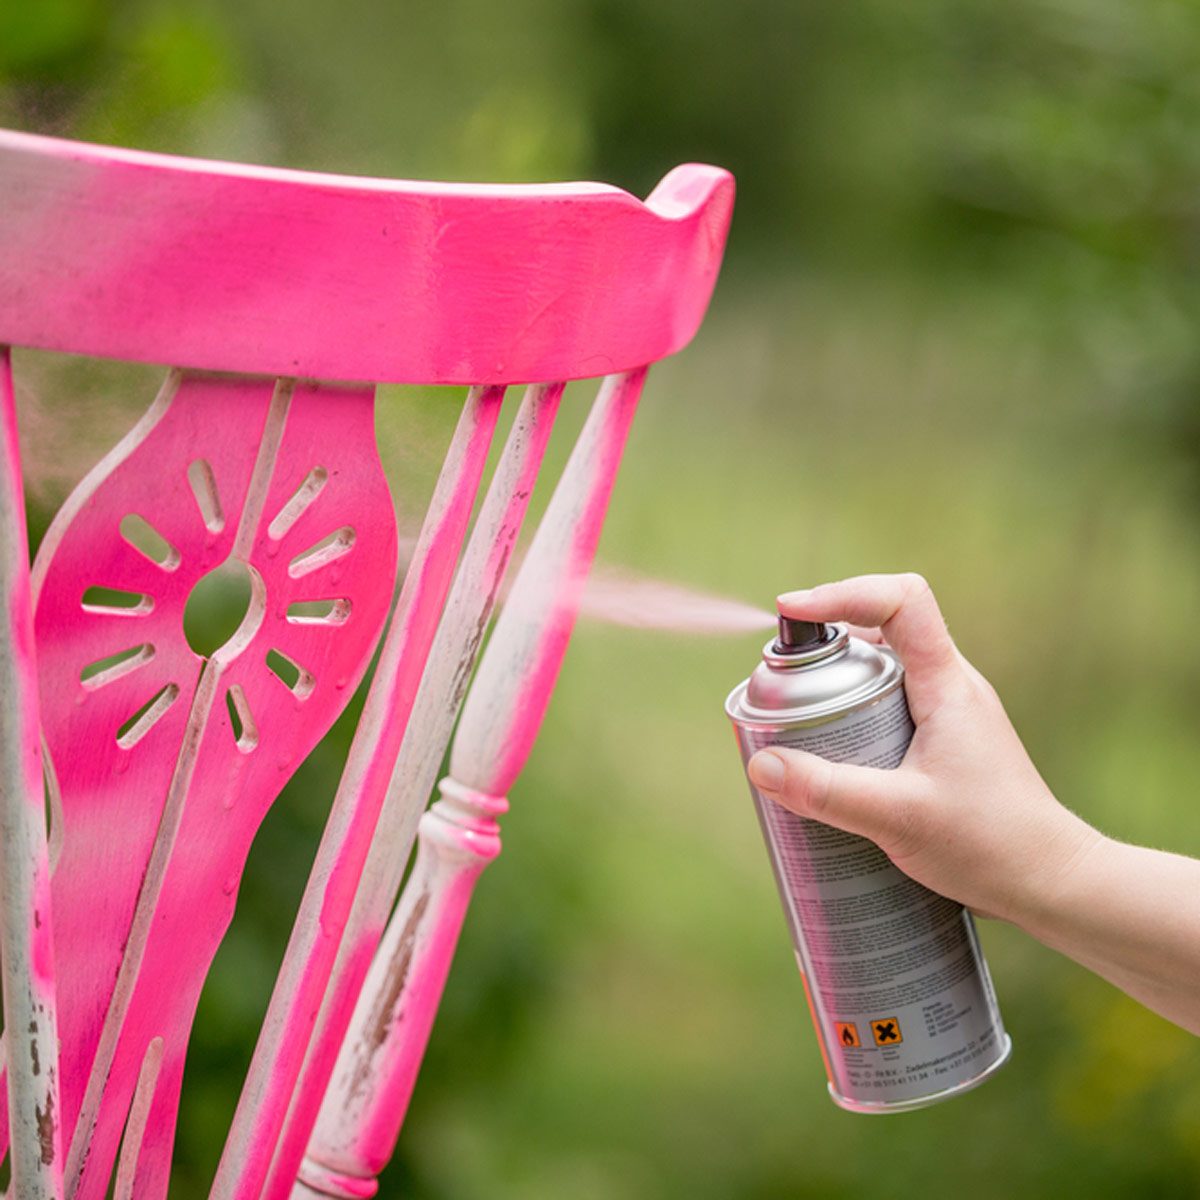 Spray paint patio furniture